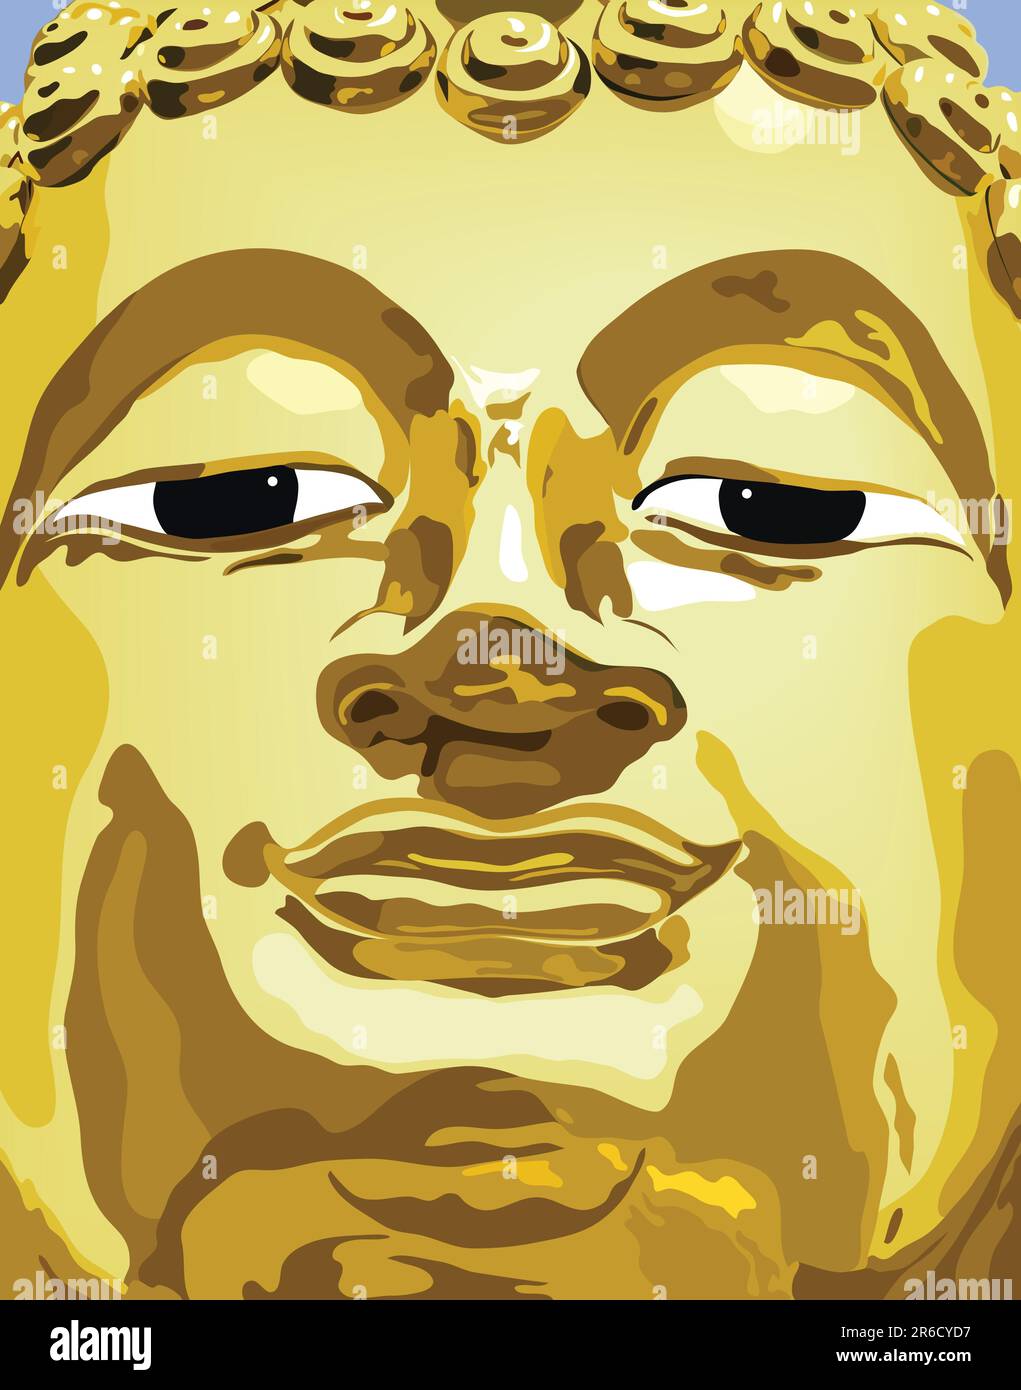 Bearbeitbares Vektor-Illustration einer Buddha-Statue Gesicht Stock Vektor